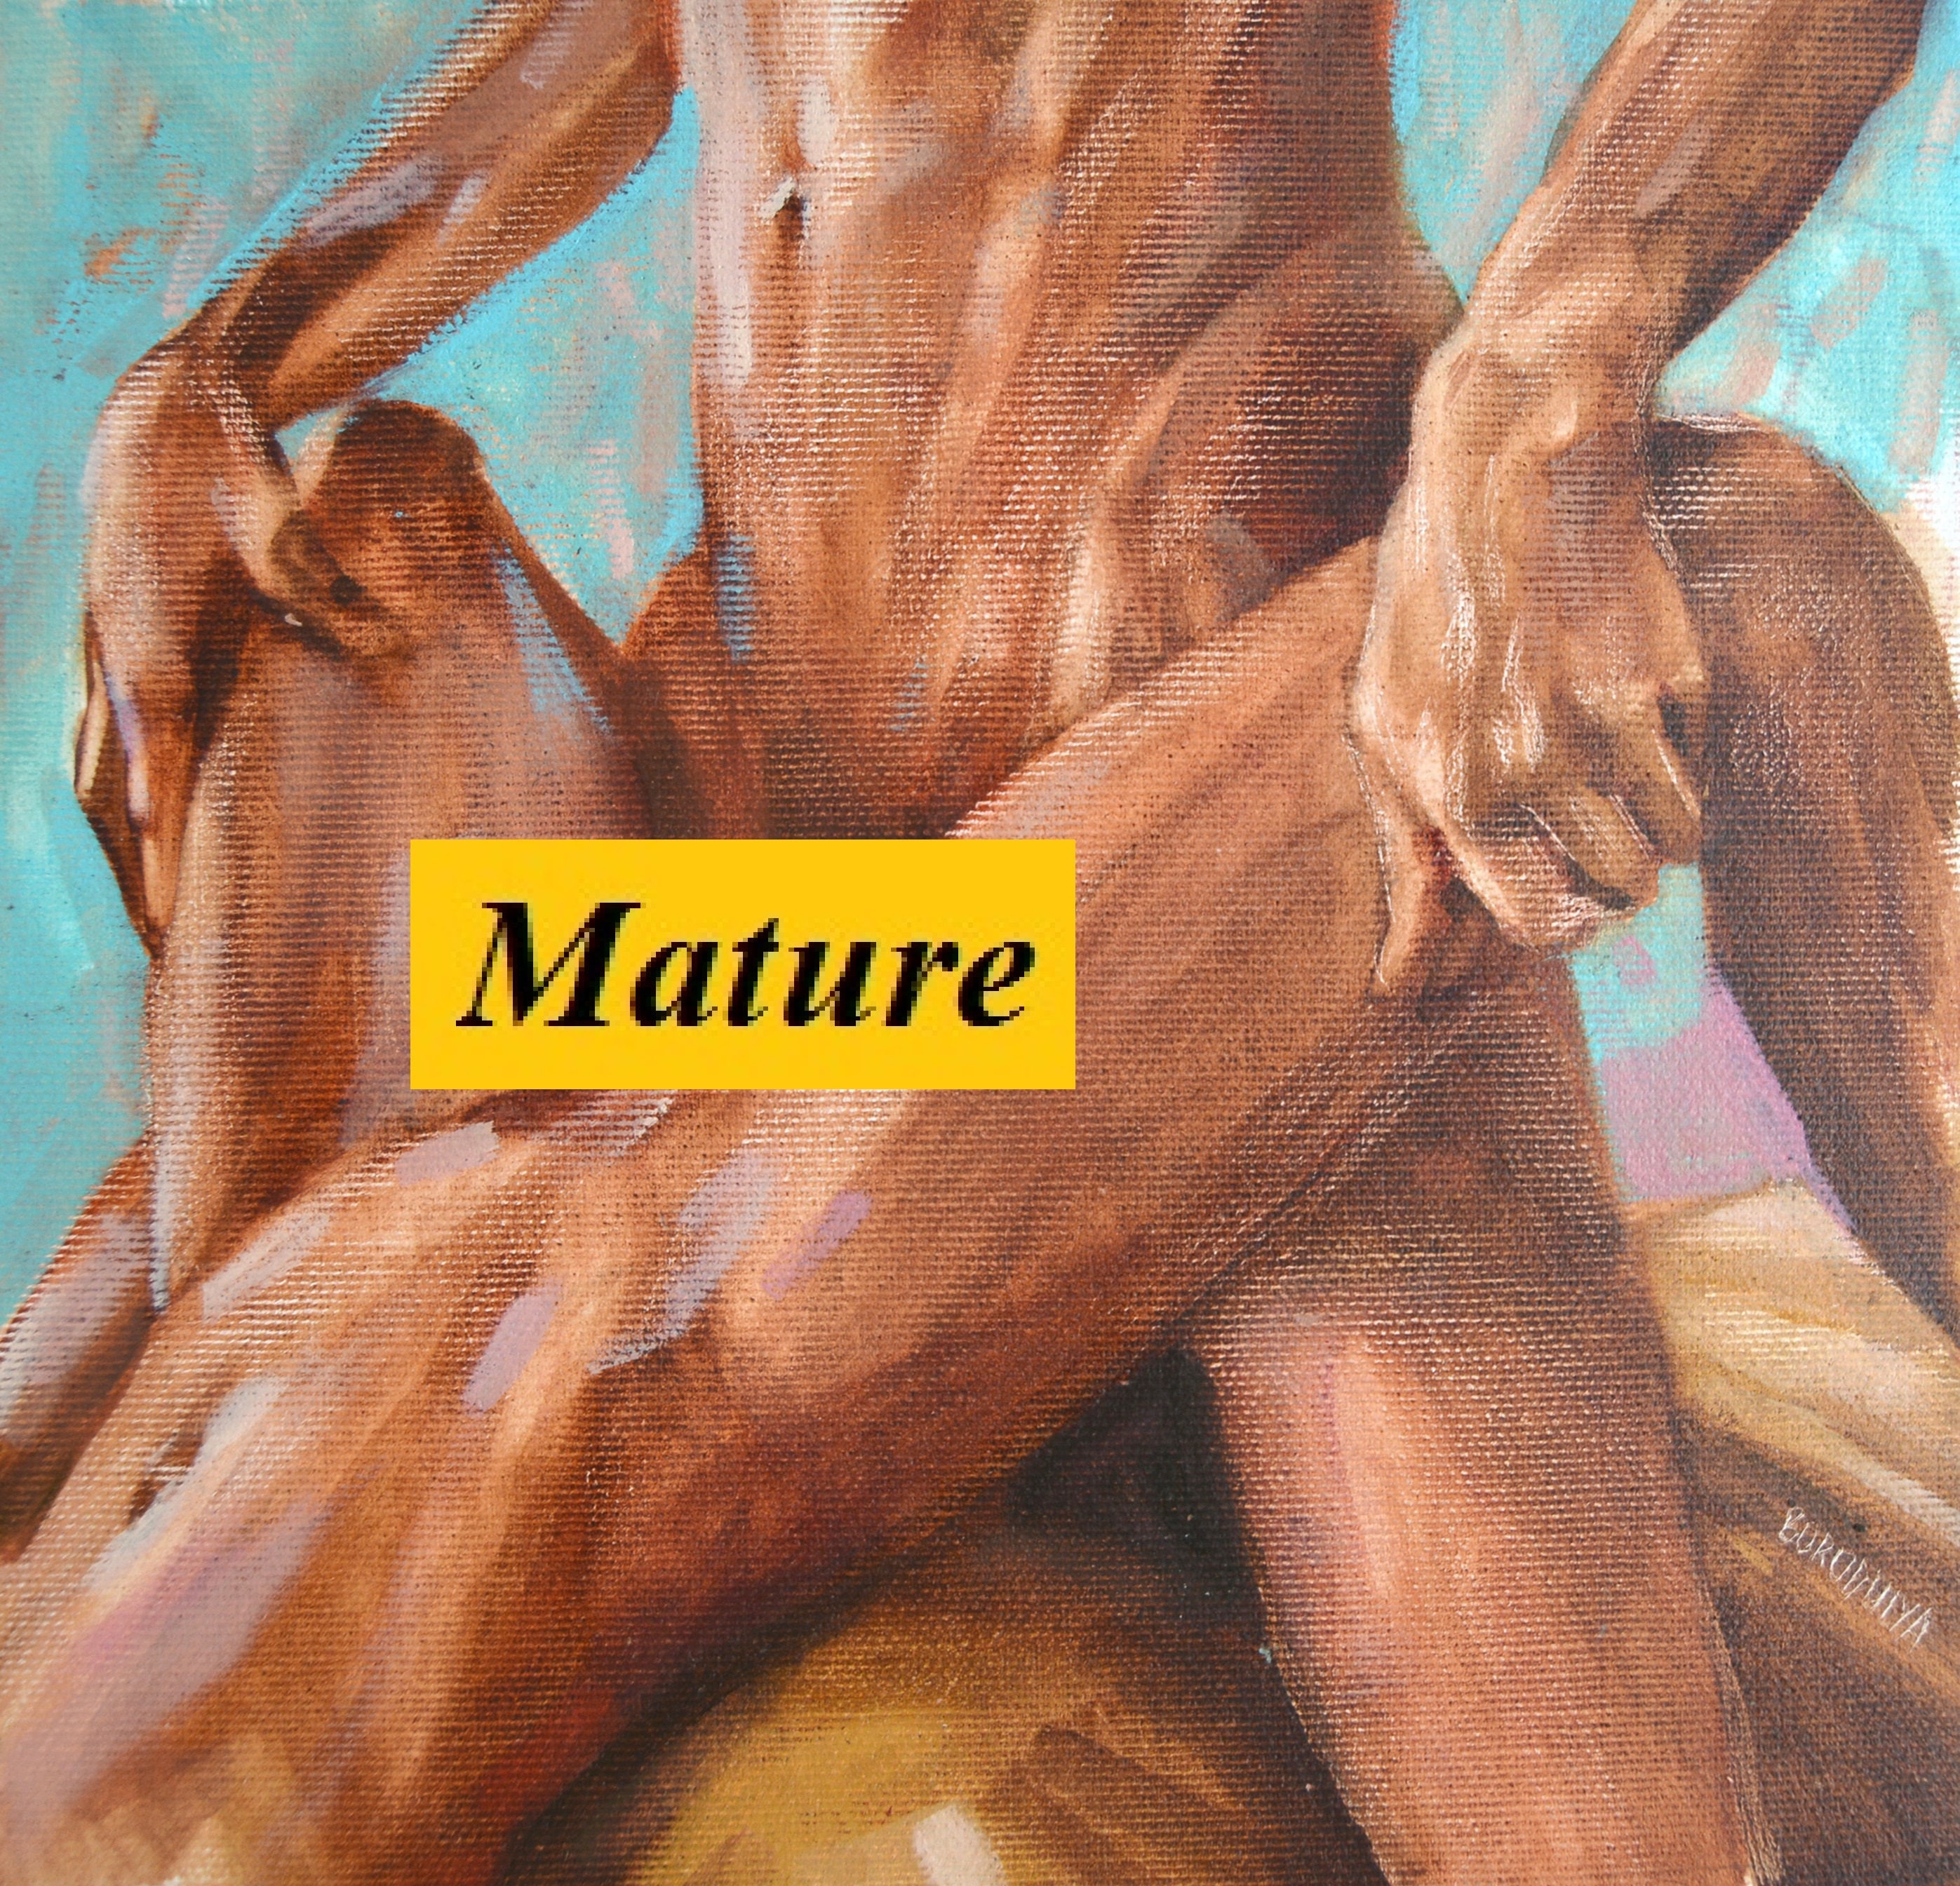 Mature Sex Wall Art Original Oil Painting Erotic Art Sex